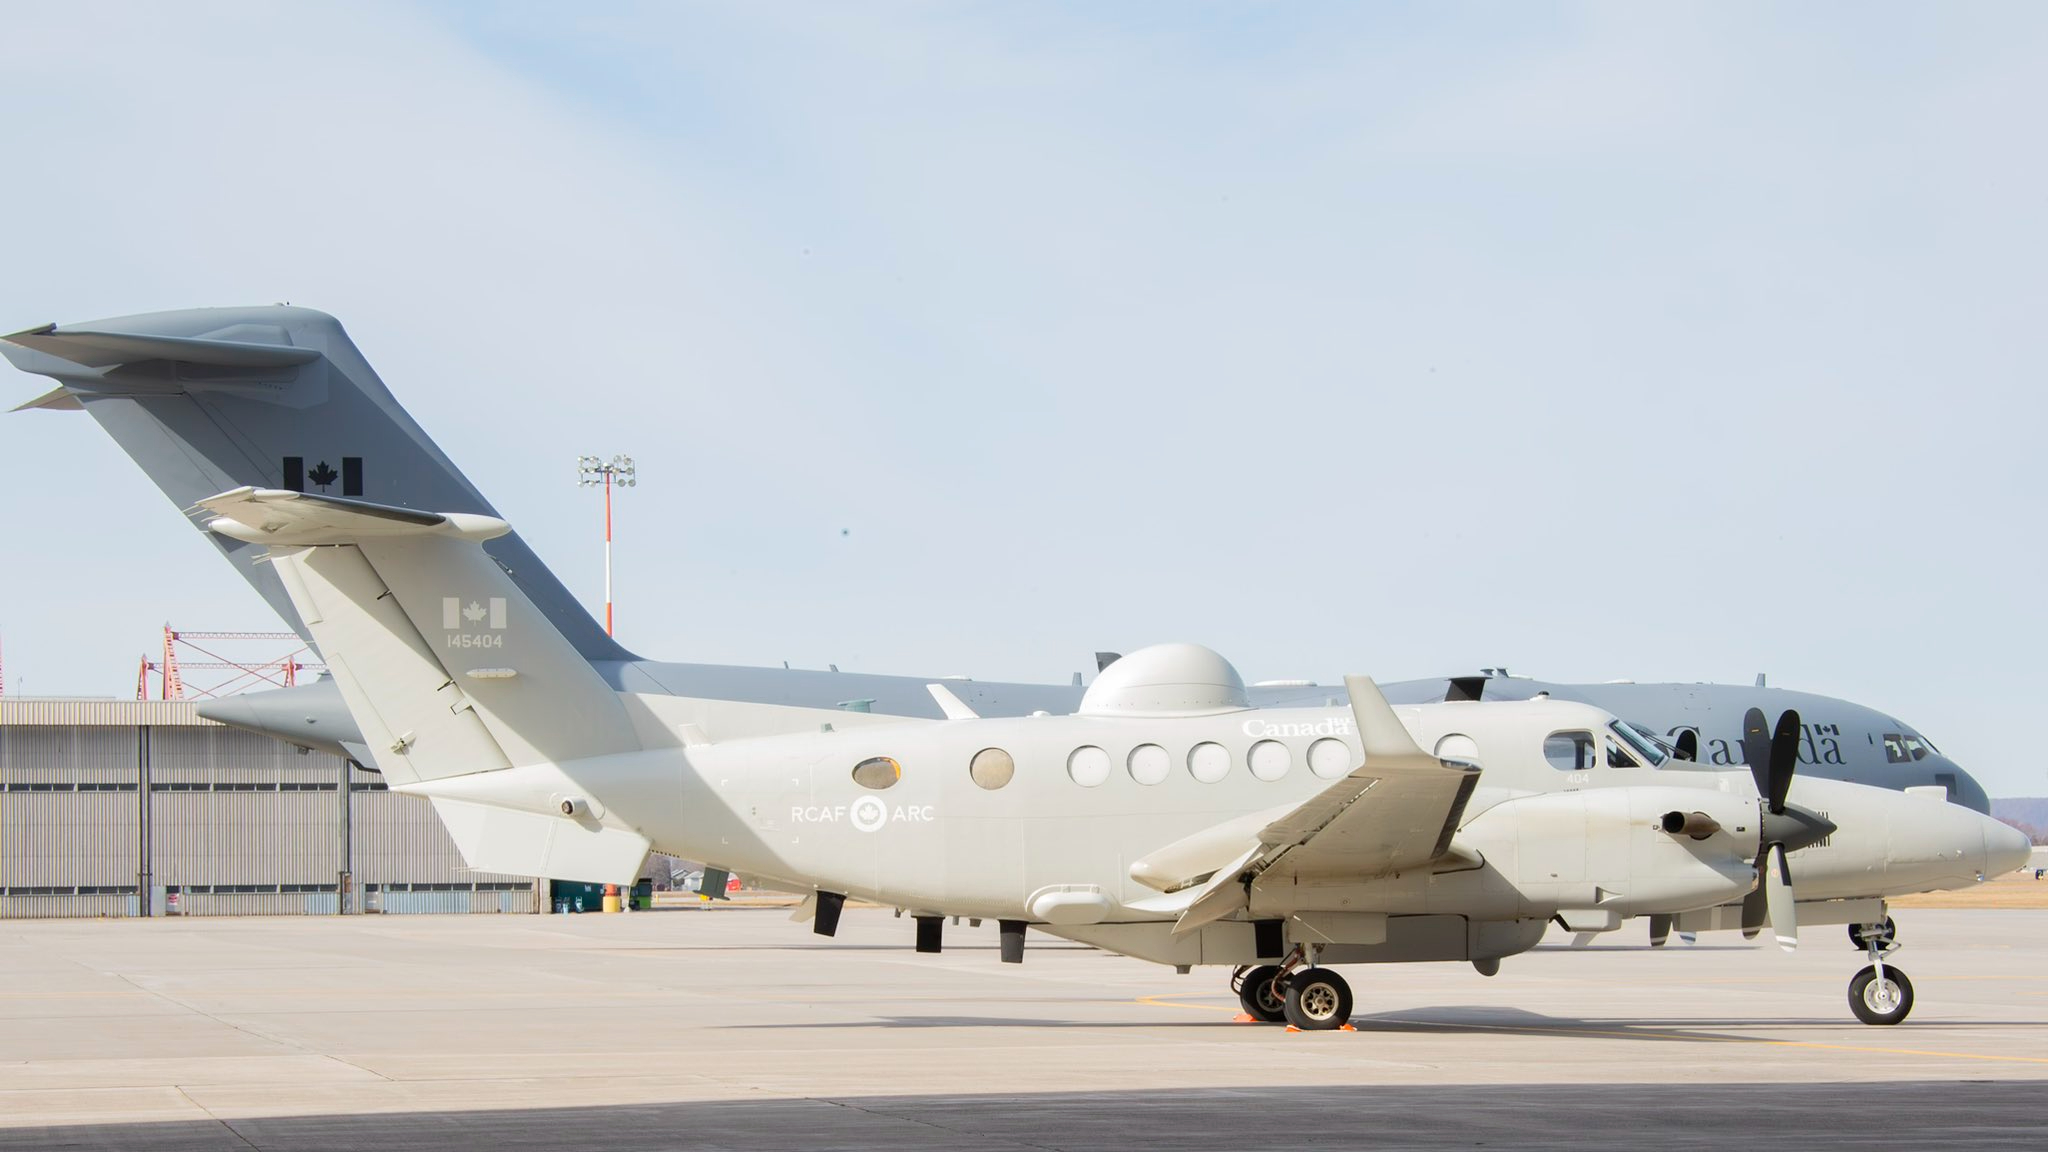 CE-145C Vigilance manned airborne intelligence, surveillance, and reconnaissance (MAISR) aircraft